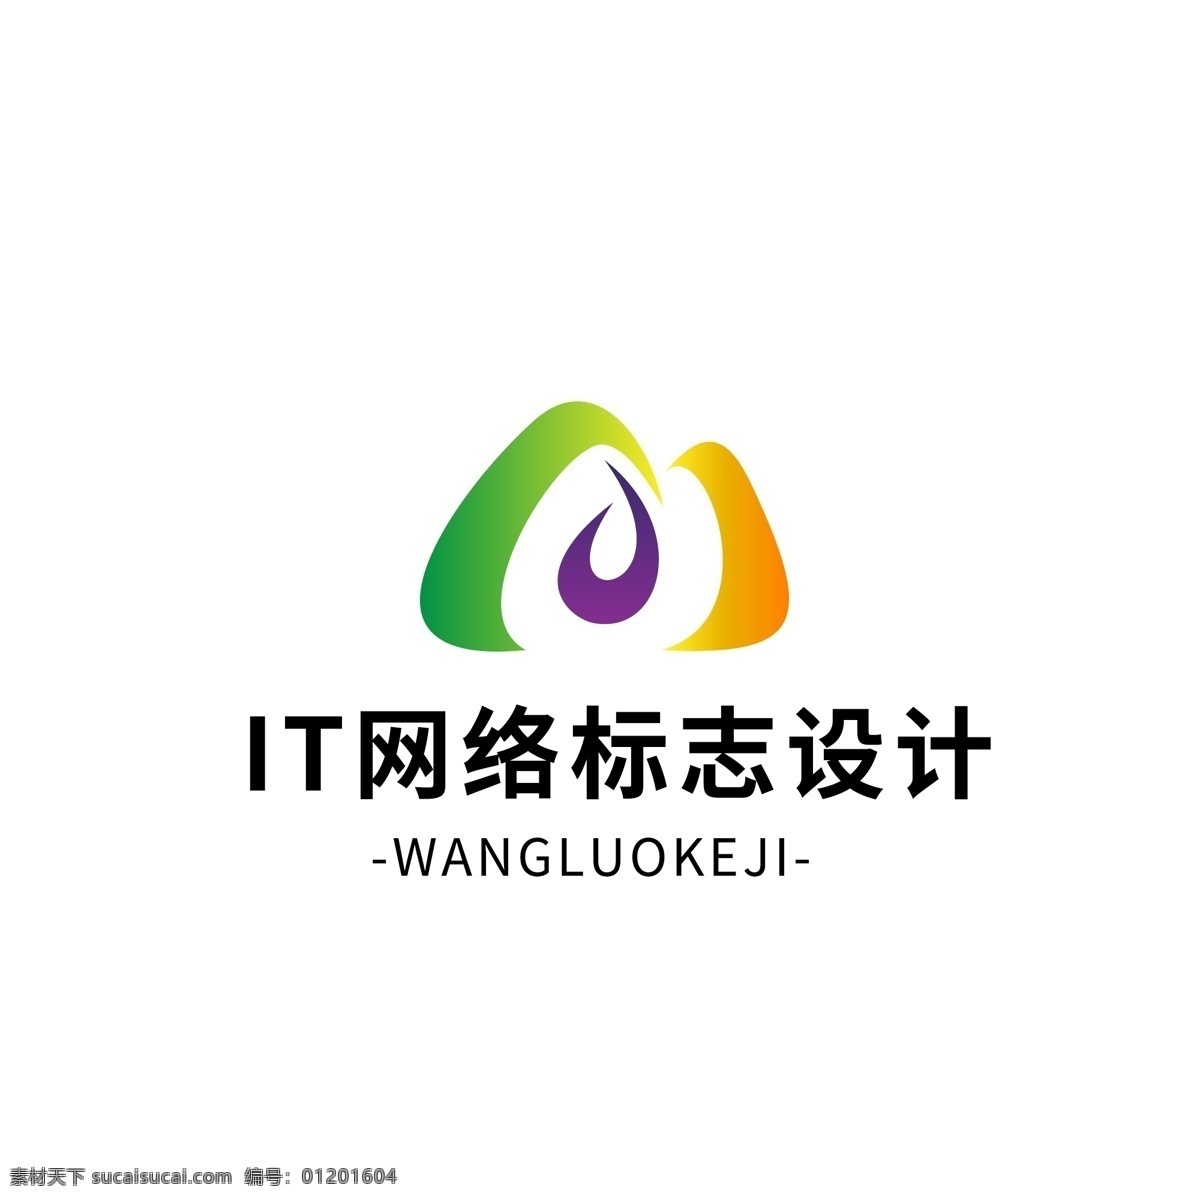 it 网络 标志设计 logo 简约 绿色 黄色 紫色 字母 标志